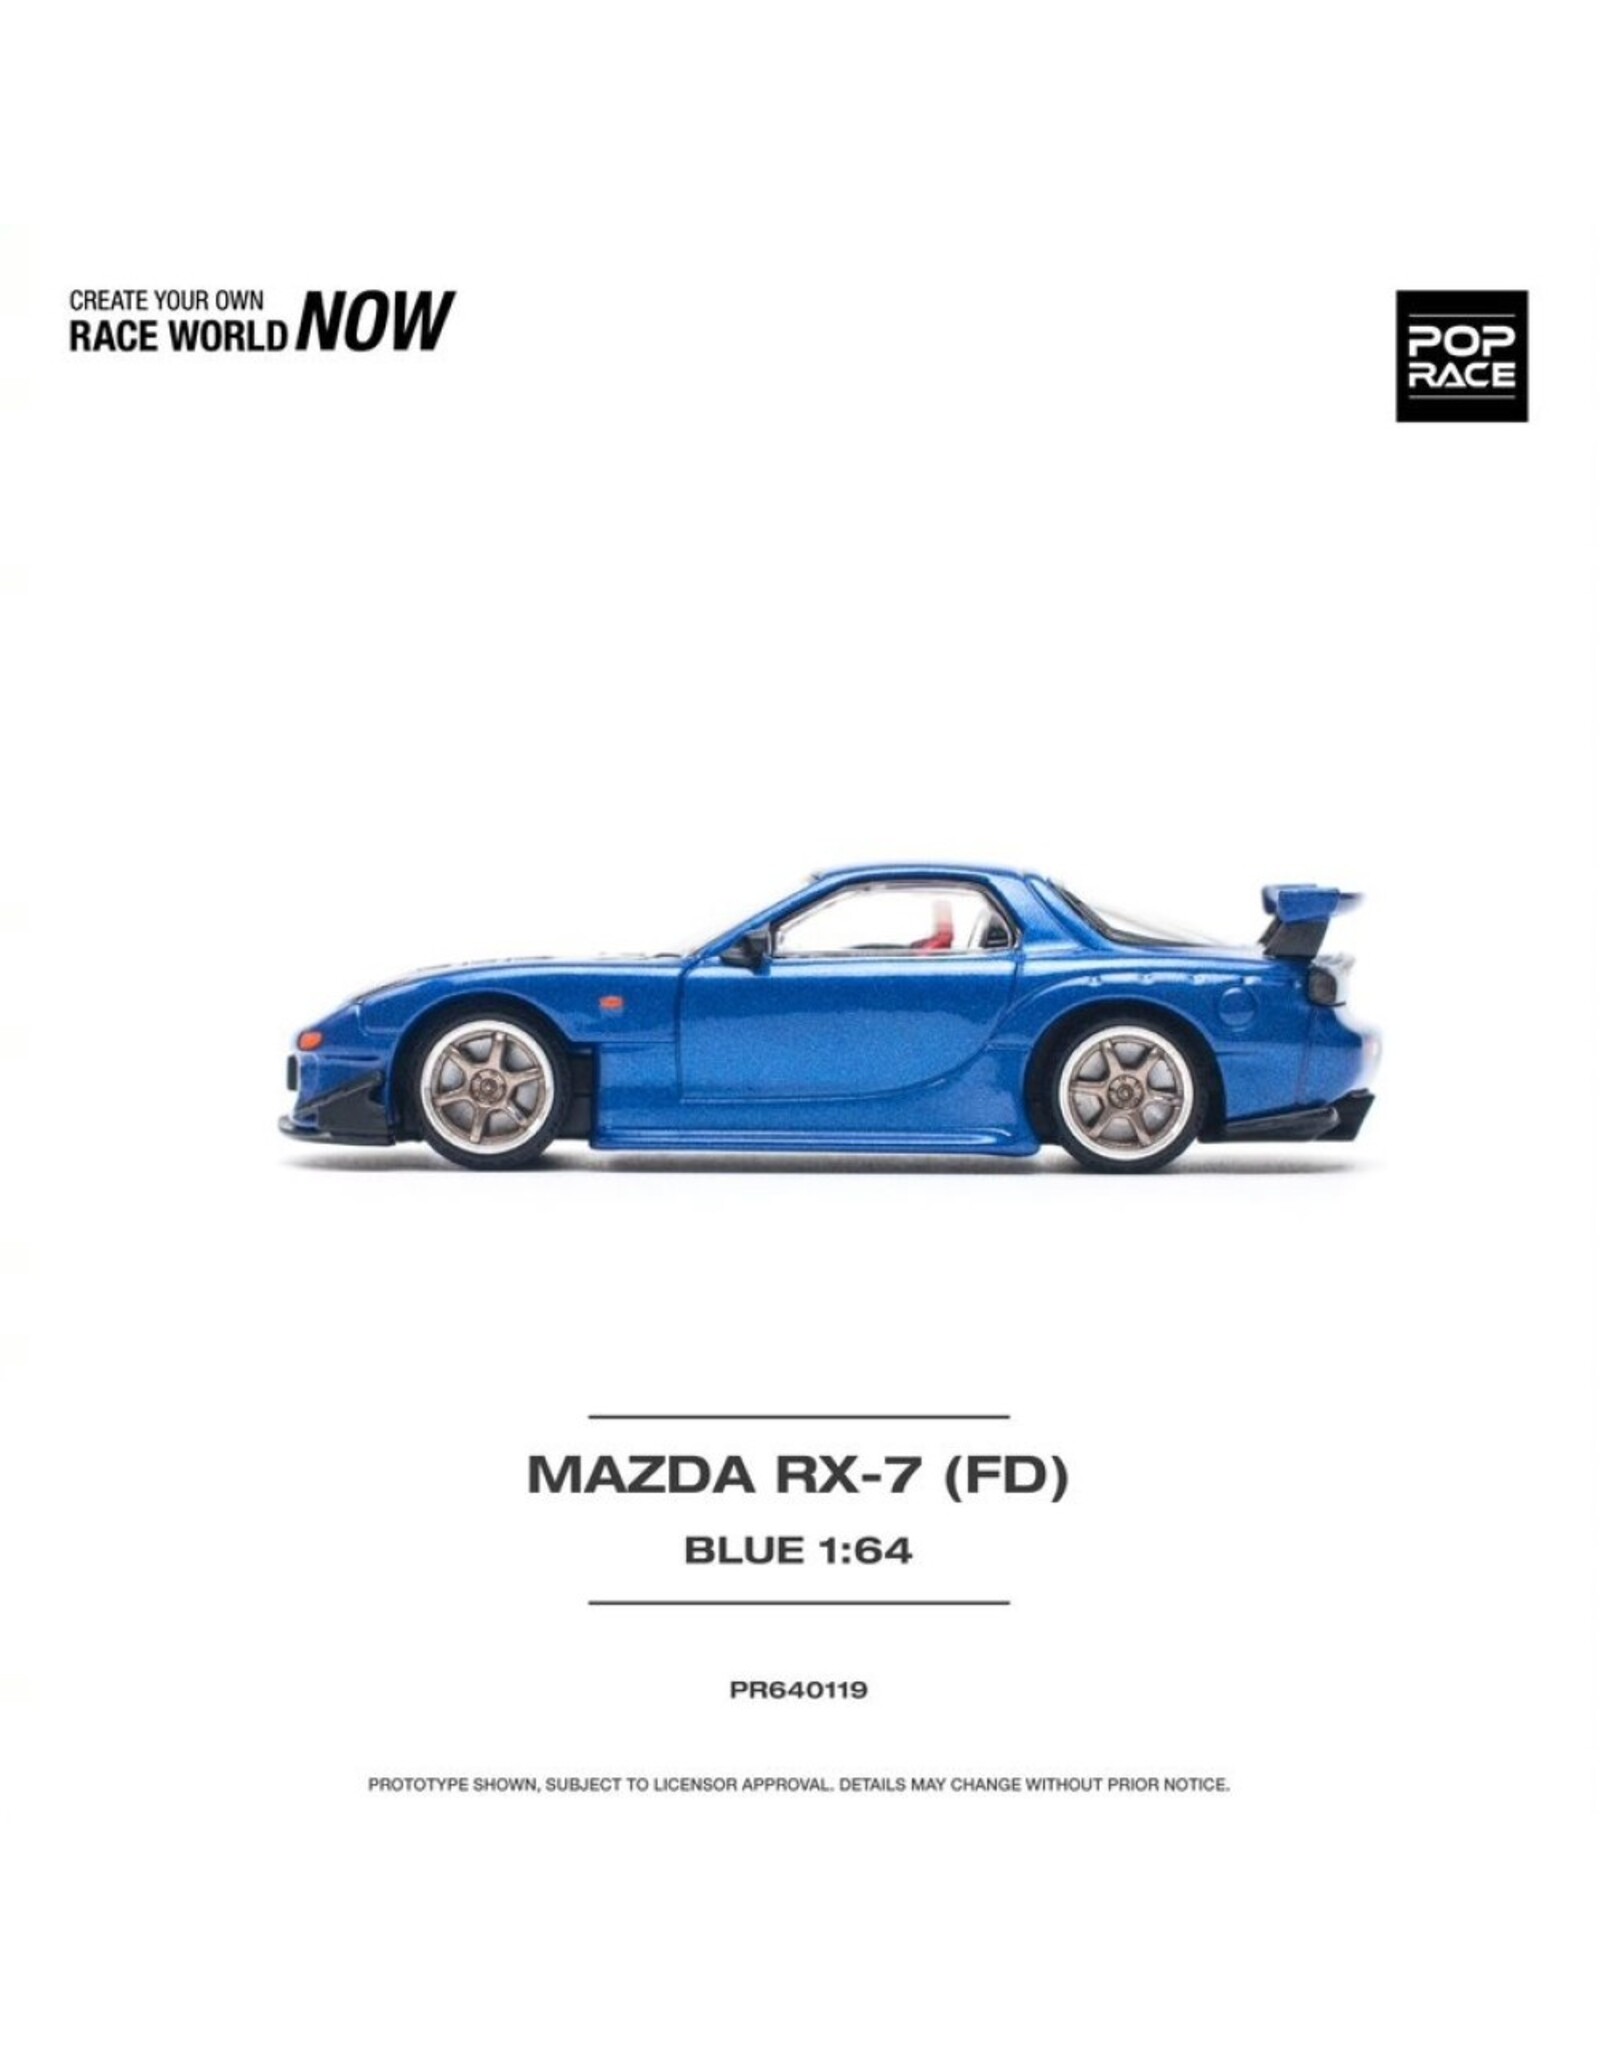 Mazda Motor corporation Mazda RX-7(FD3S)Re-Amemiya widebody(blue metallic)